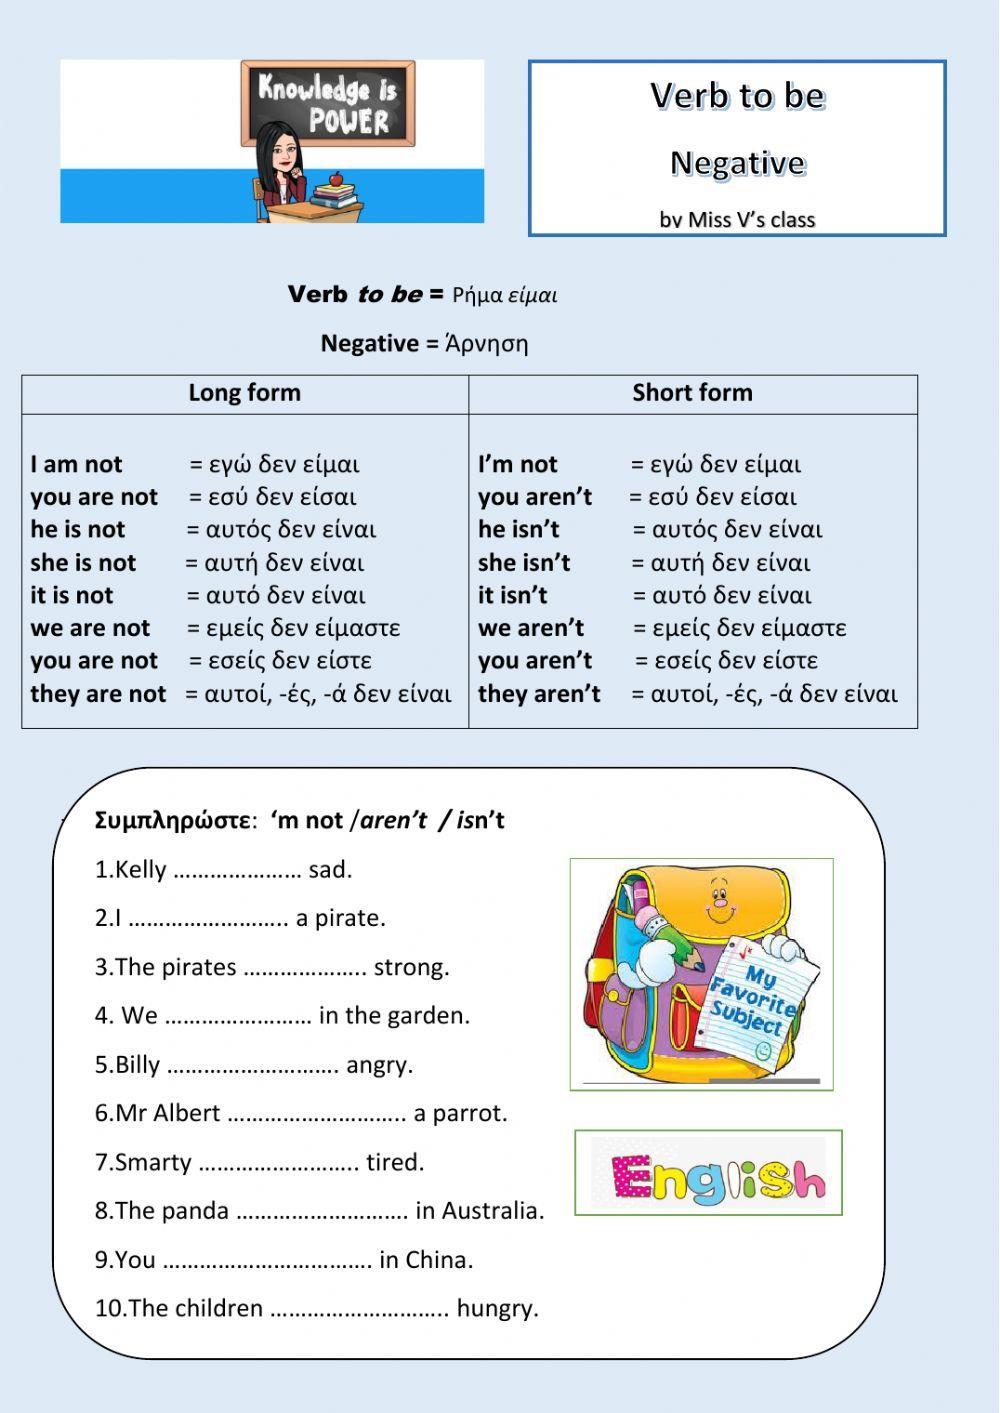 Verb to be Negative - Long and Short form worksheet | Live Worksheets